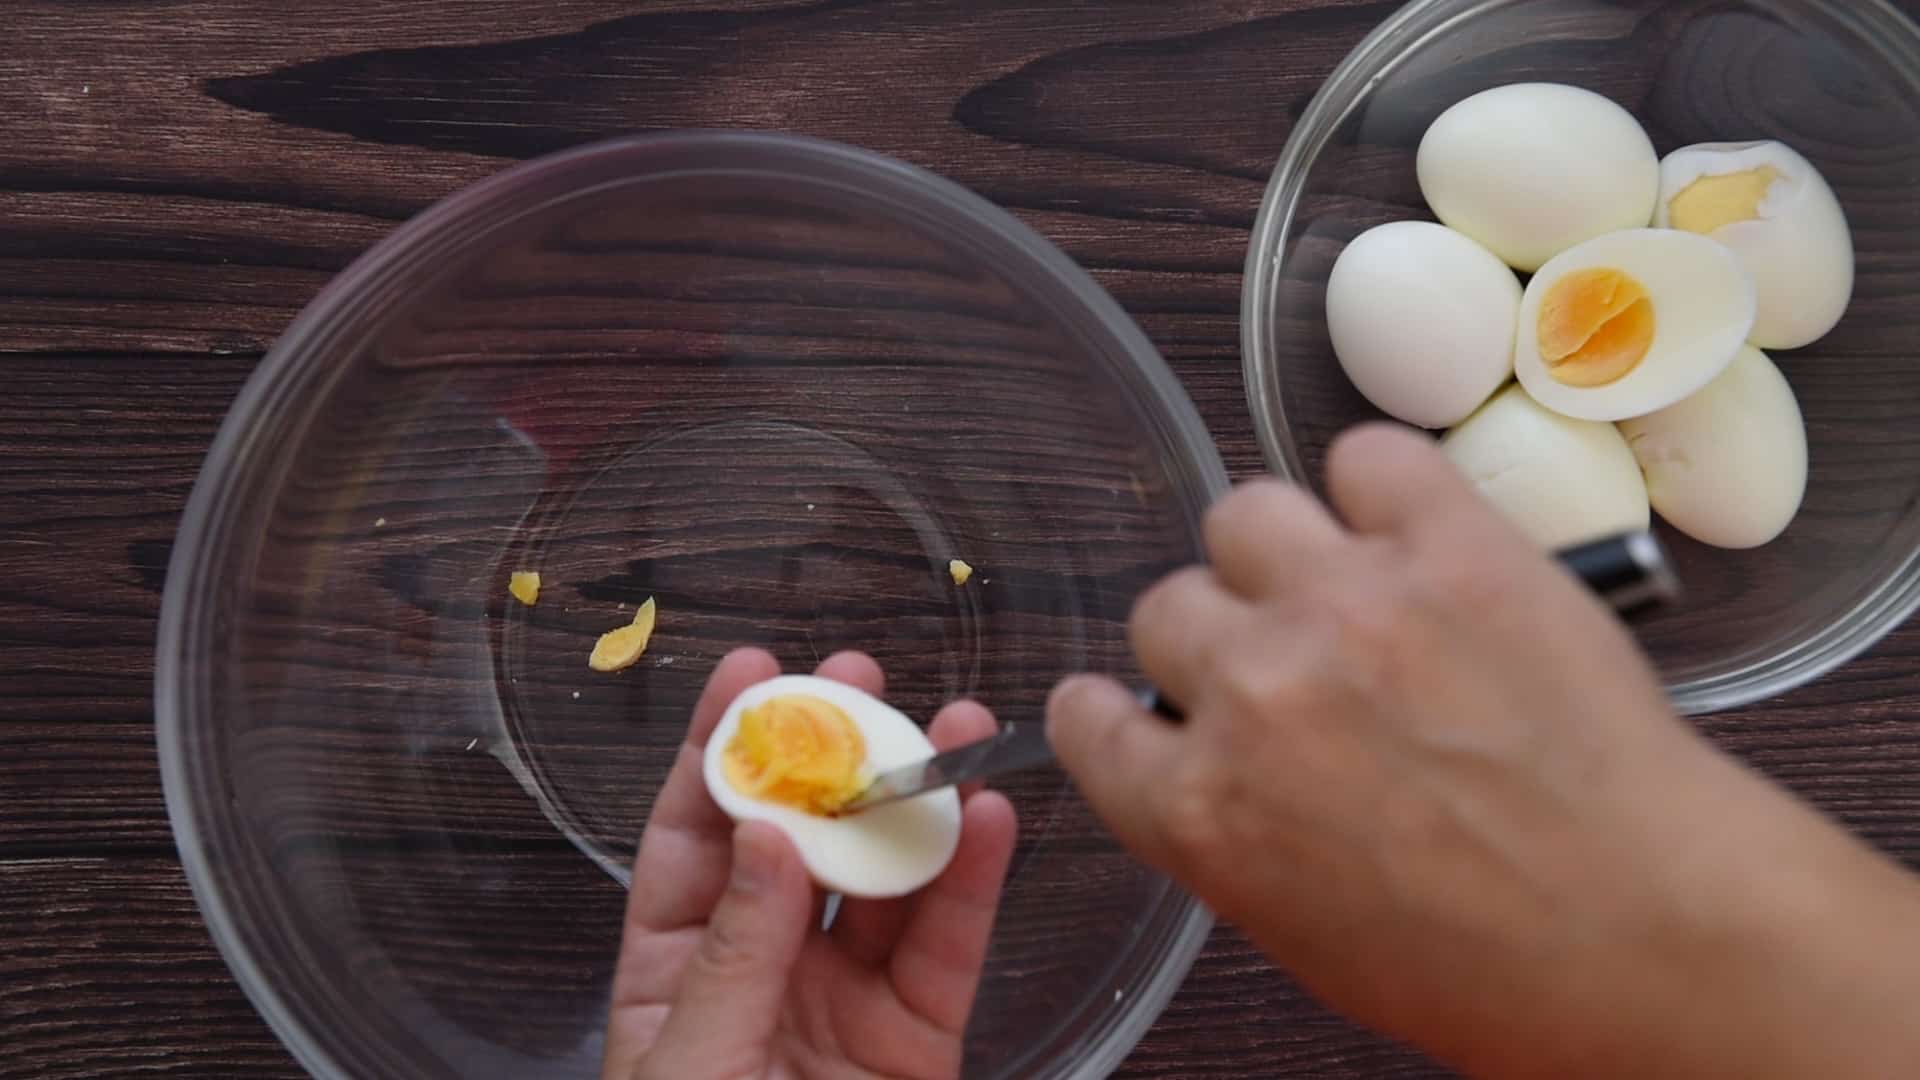 remove the yolk